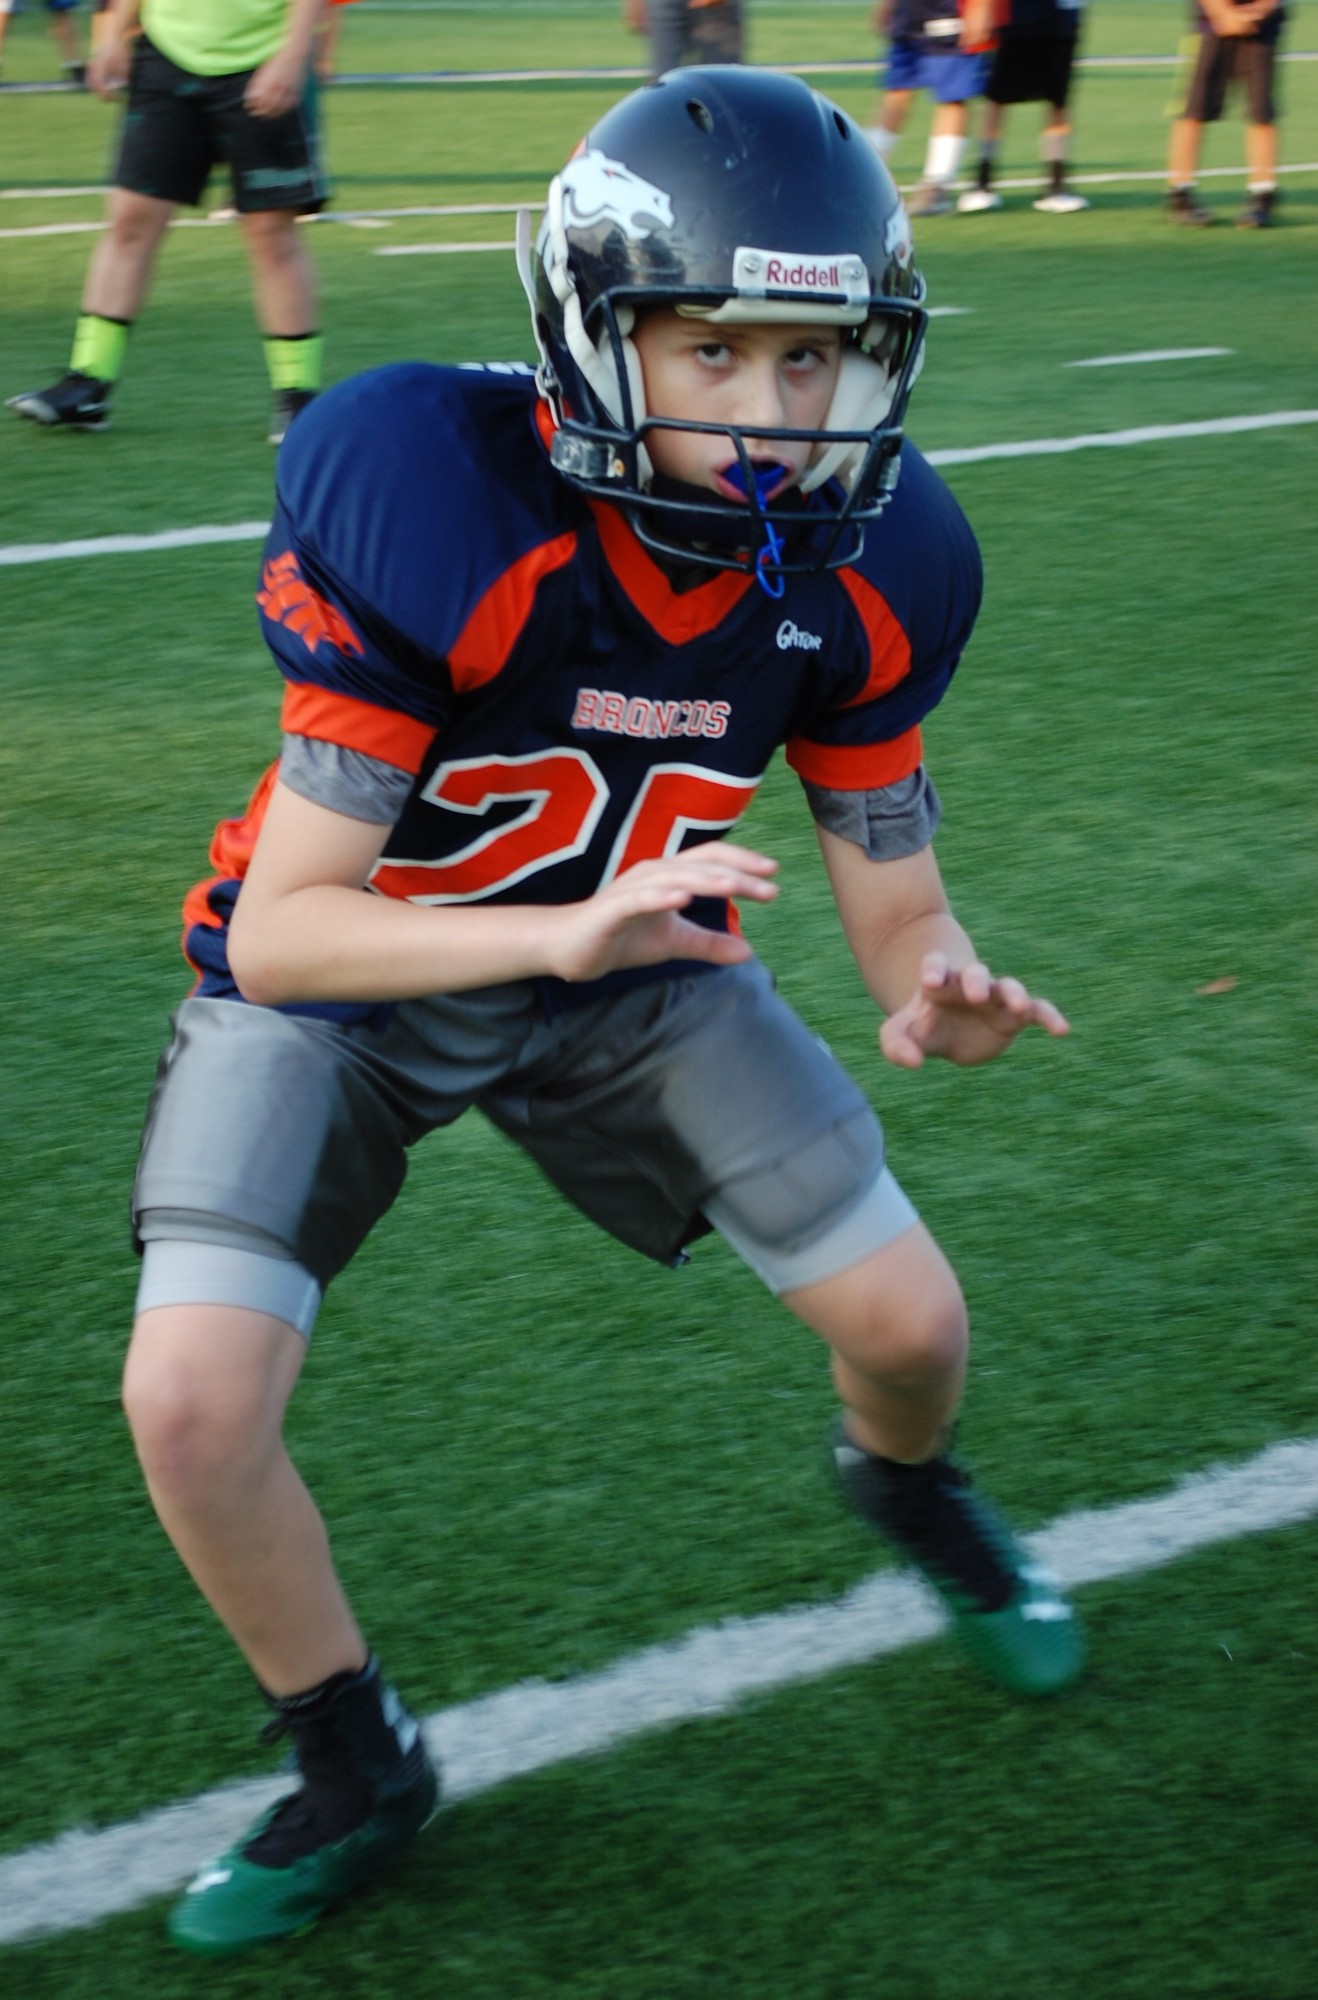 Dante Morzini, 12, practiced his skills on the high school football field last week.